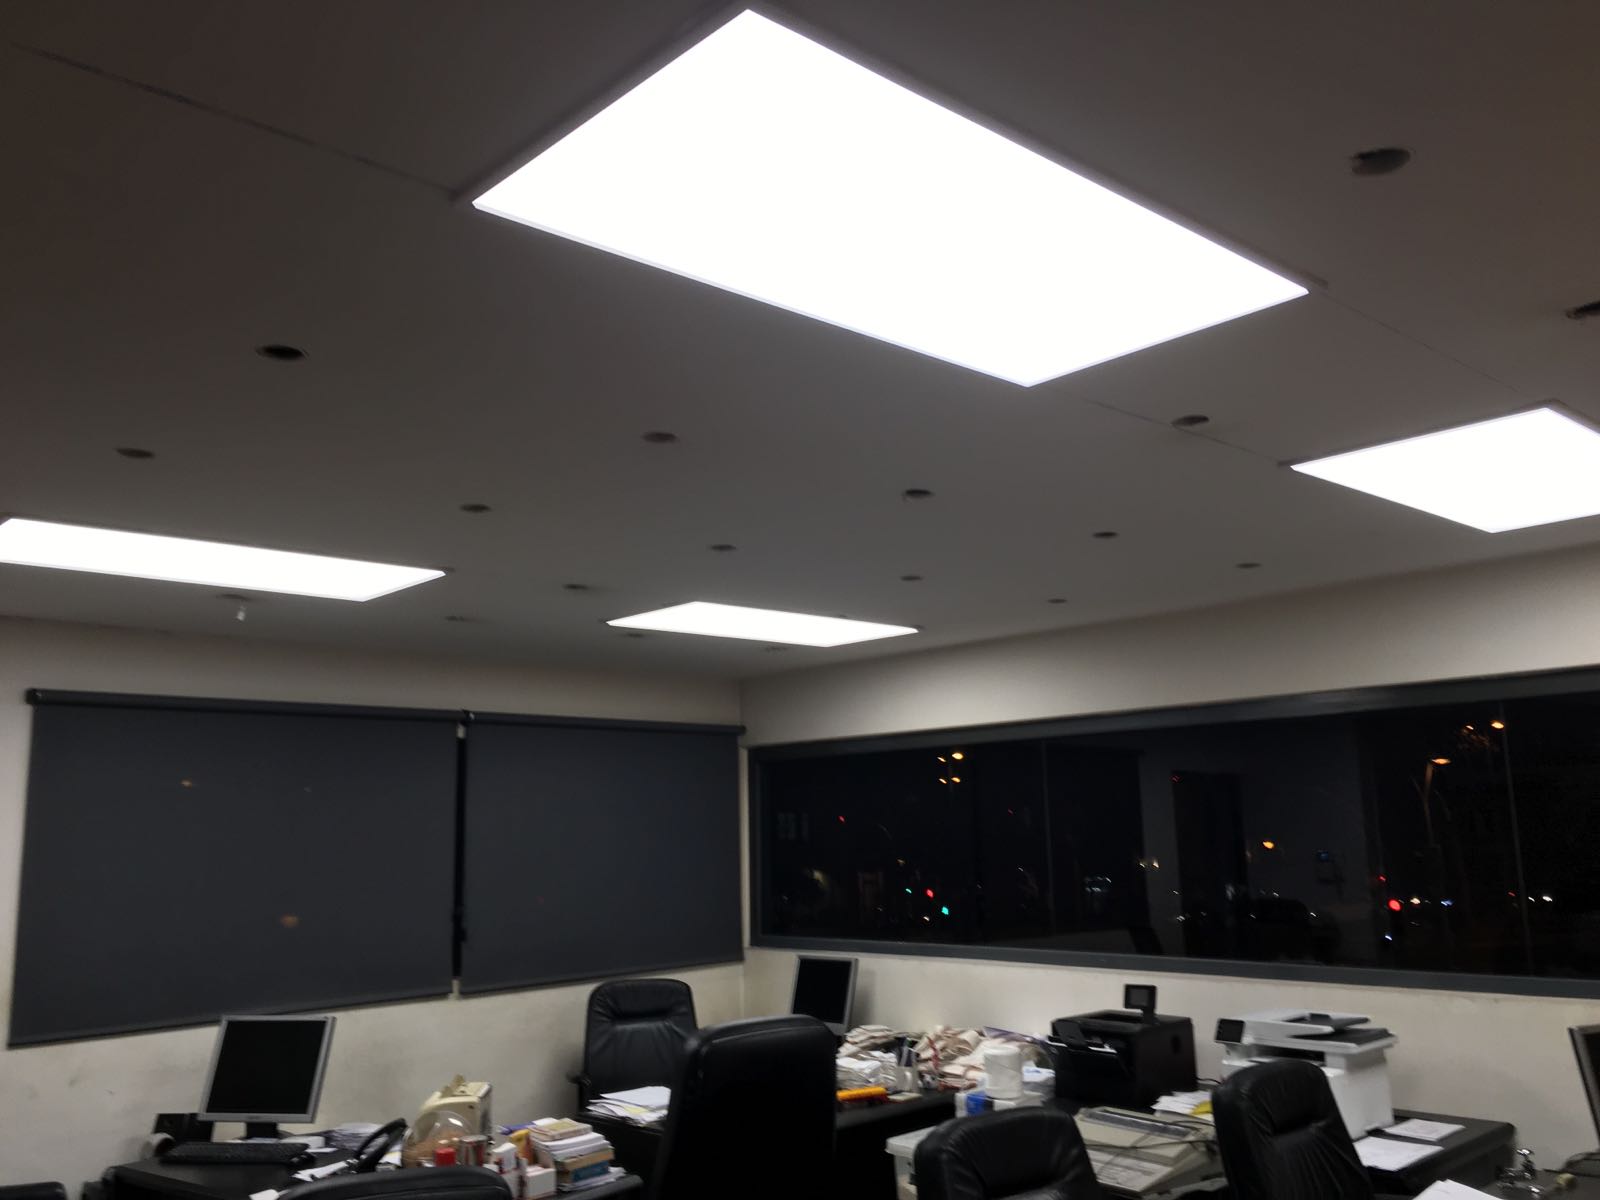 Sustitución de luminarias en oficina por pantallas LED.